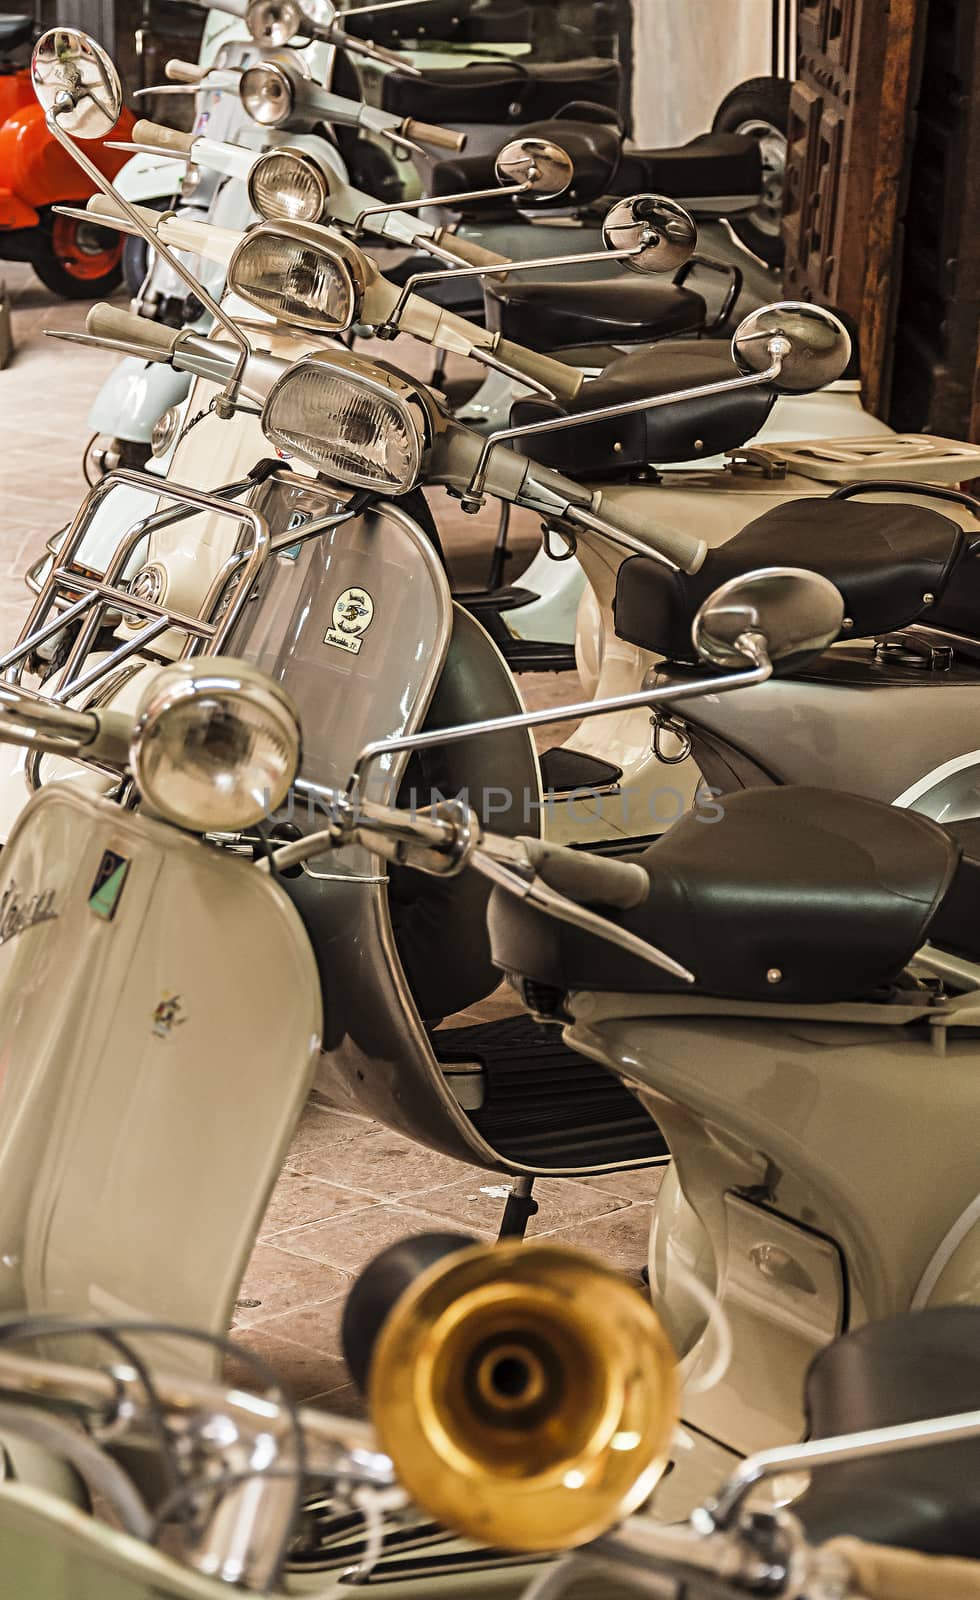 URBINO - NOVEMBER 3: old Vespa scooters in an historical museum on November 3, 2013 in Urbino, Italy